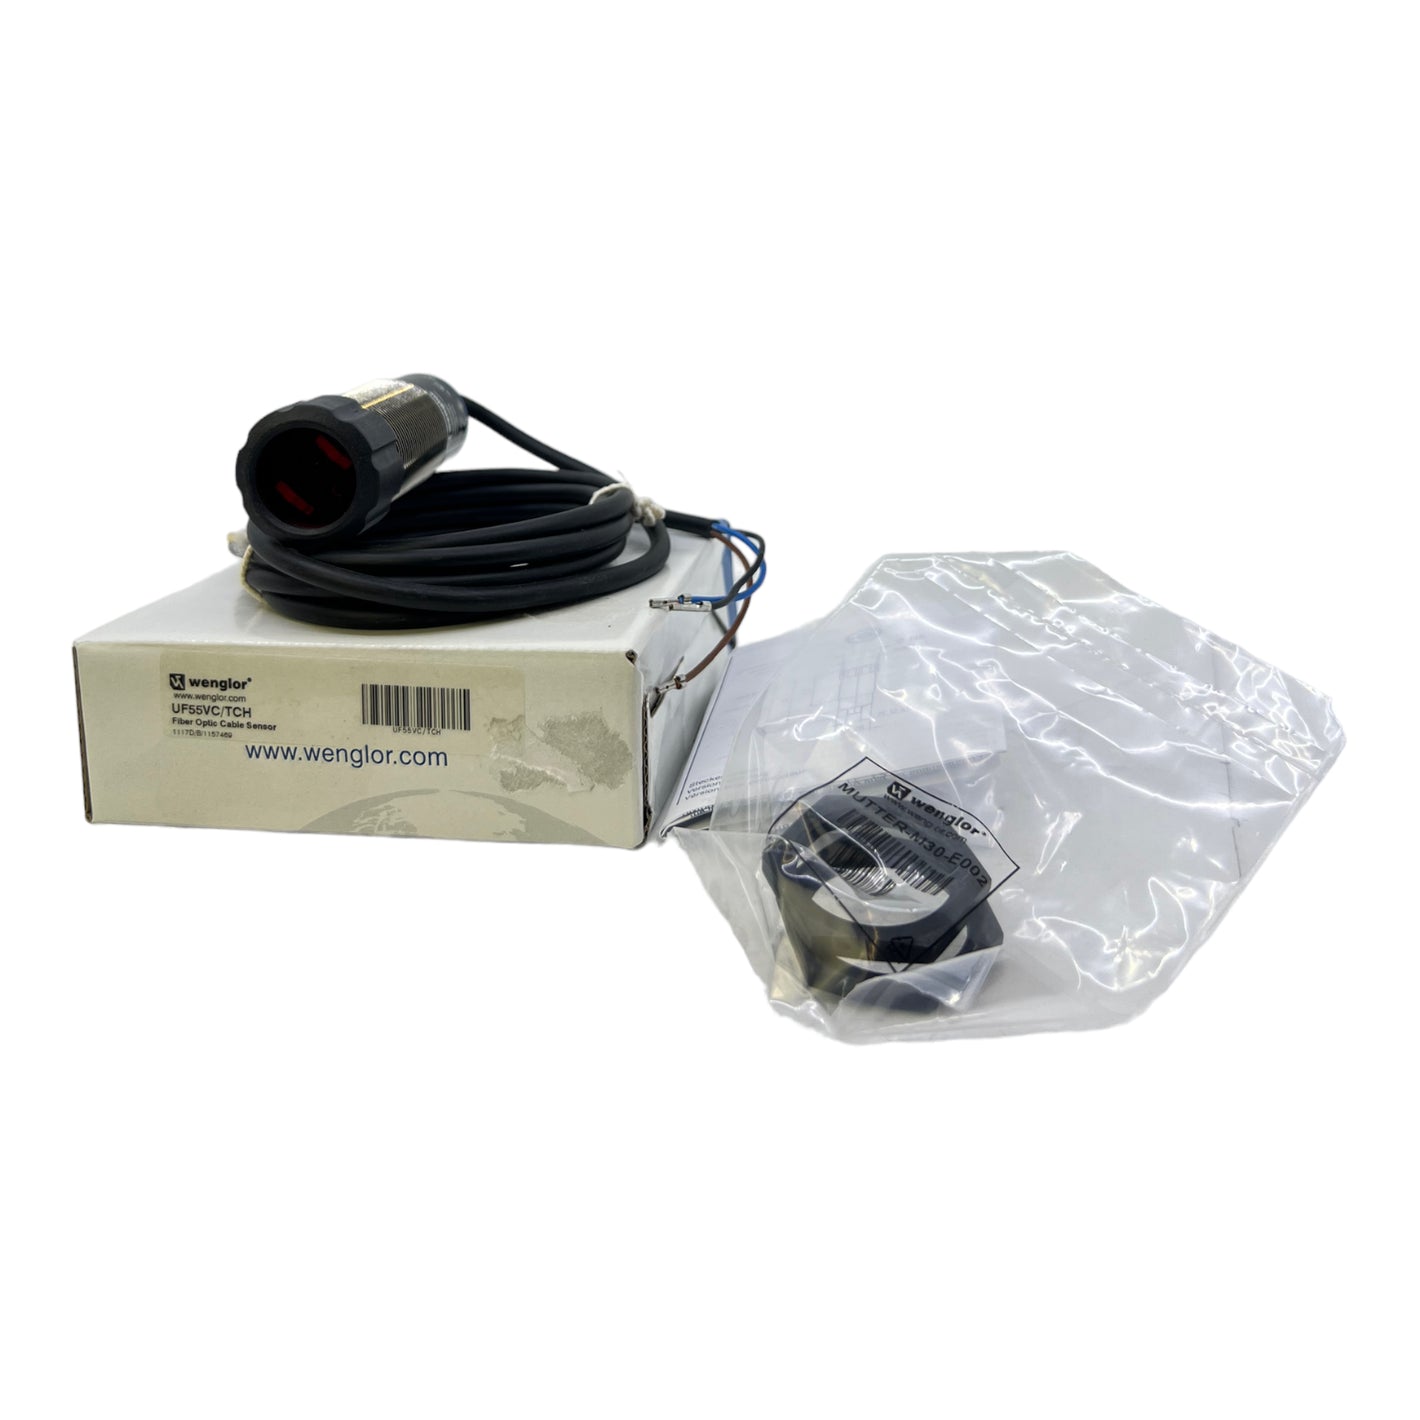 Wenglor UF55VC/TCH fiber optic cable sensors 10…30V DC sensors 